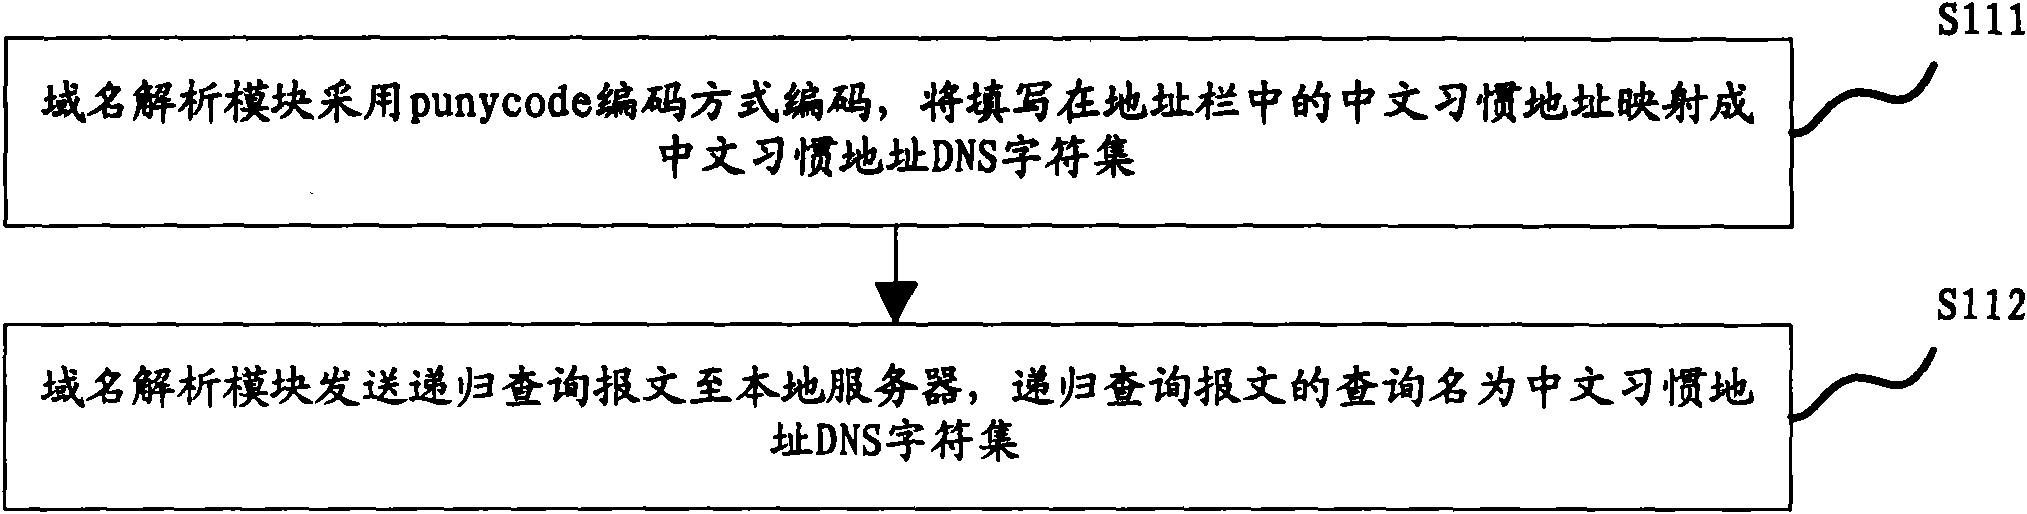 Chinese habit address resolution method